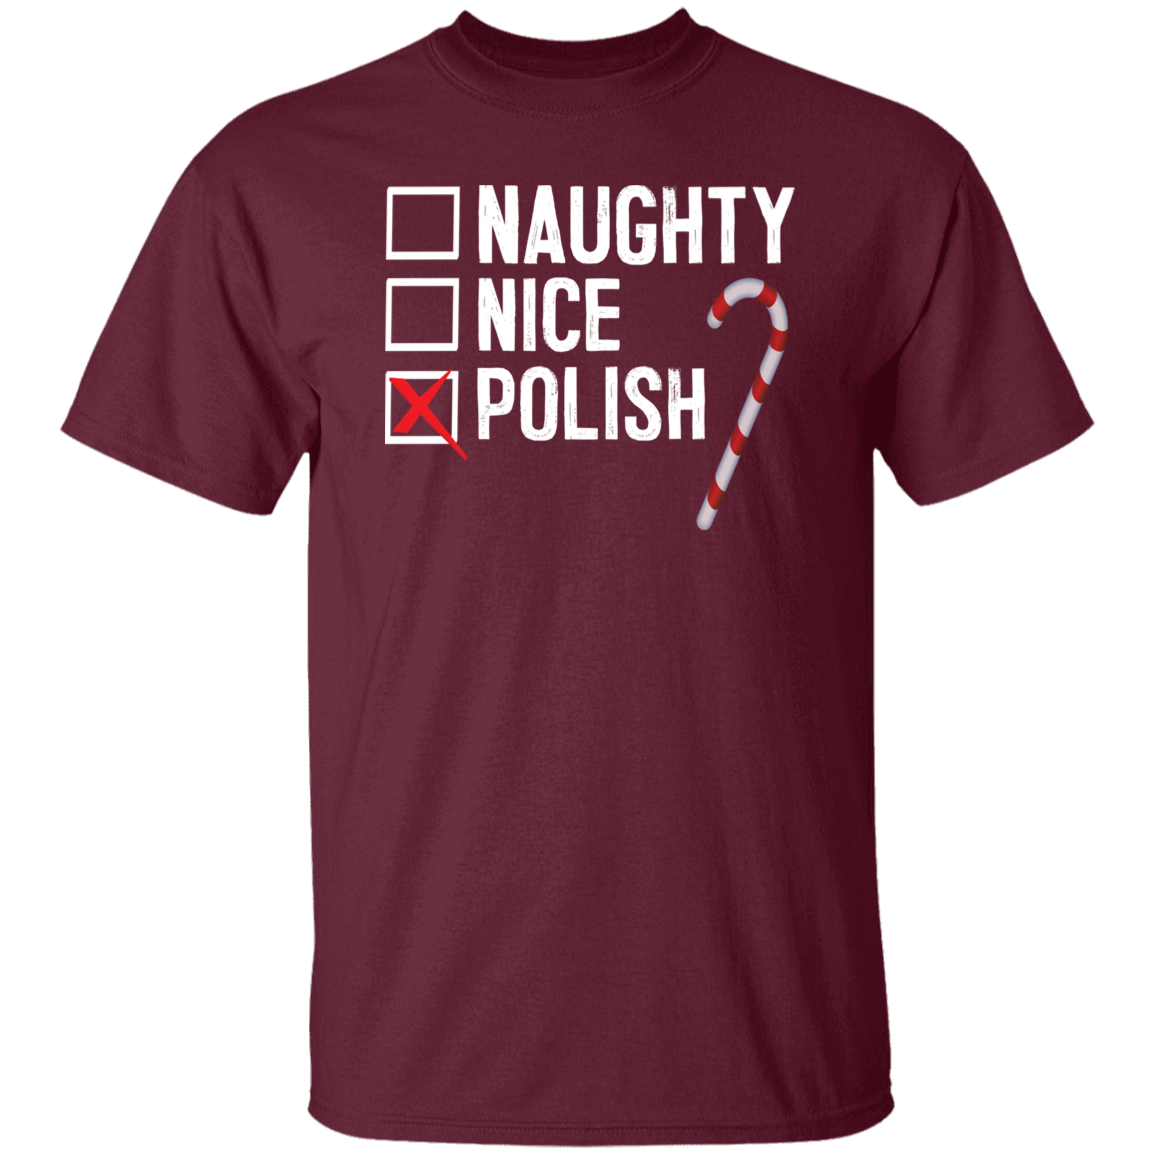 Polish Naughty Or Nice List Apparel CustomCat G500 5.3 oz. T-Shirt Maroon S